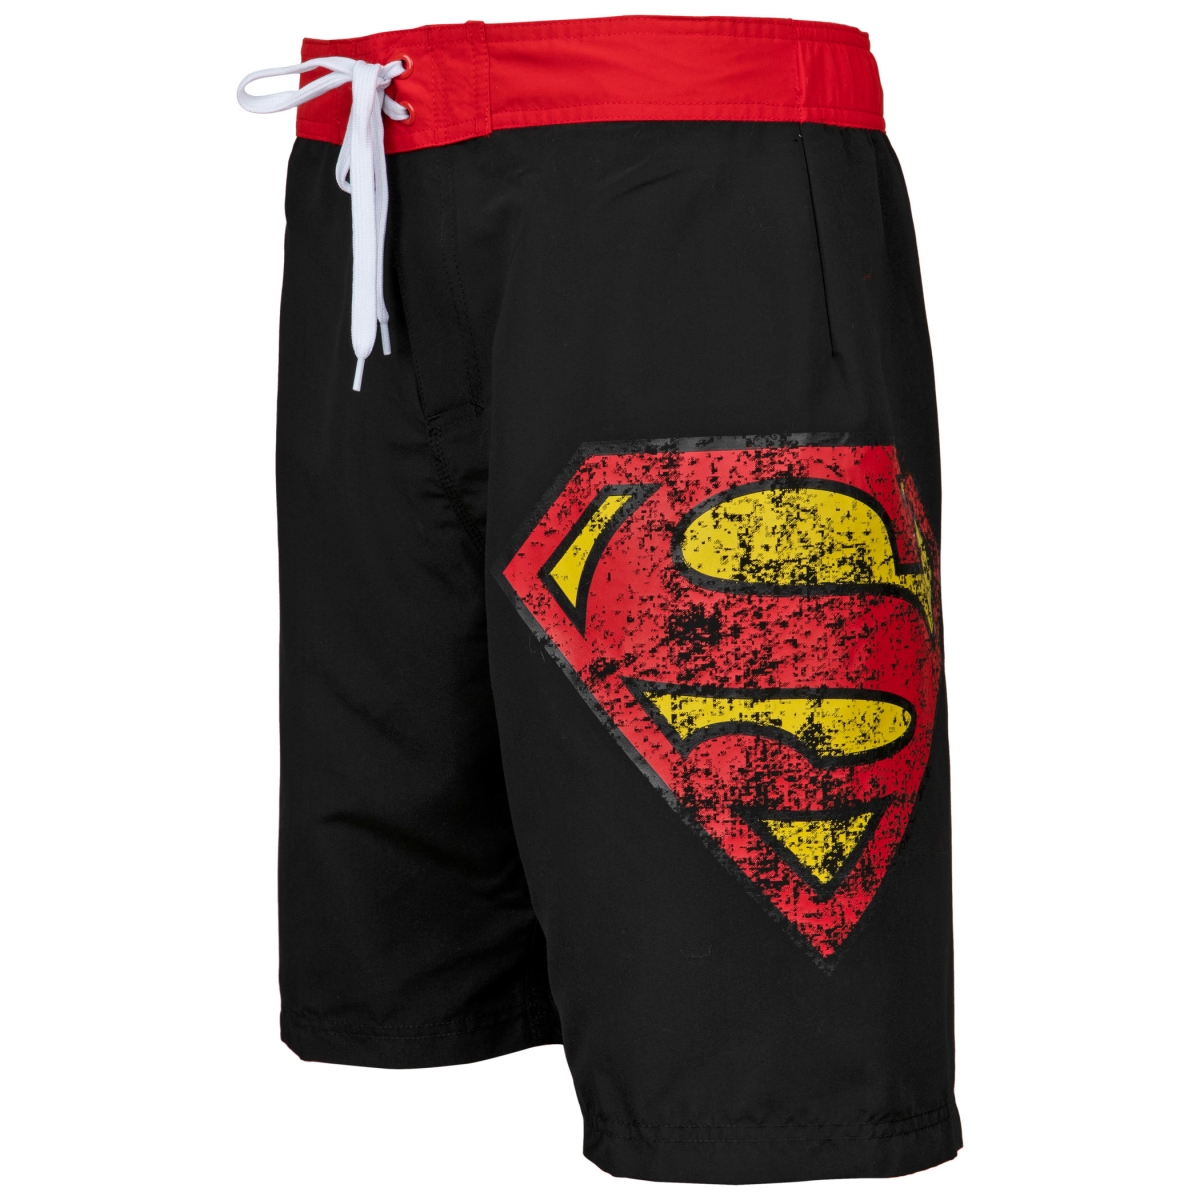 Picture of Superman 803465-large 36-38 Superman Symbol Swim Board Shorts, Black - Large 36-38